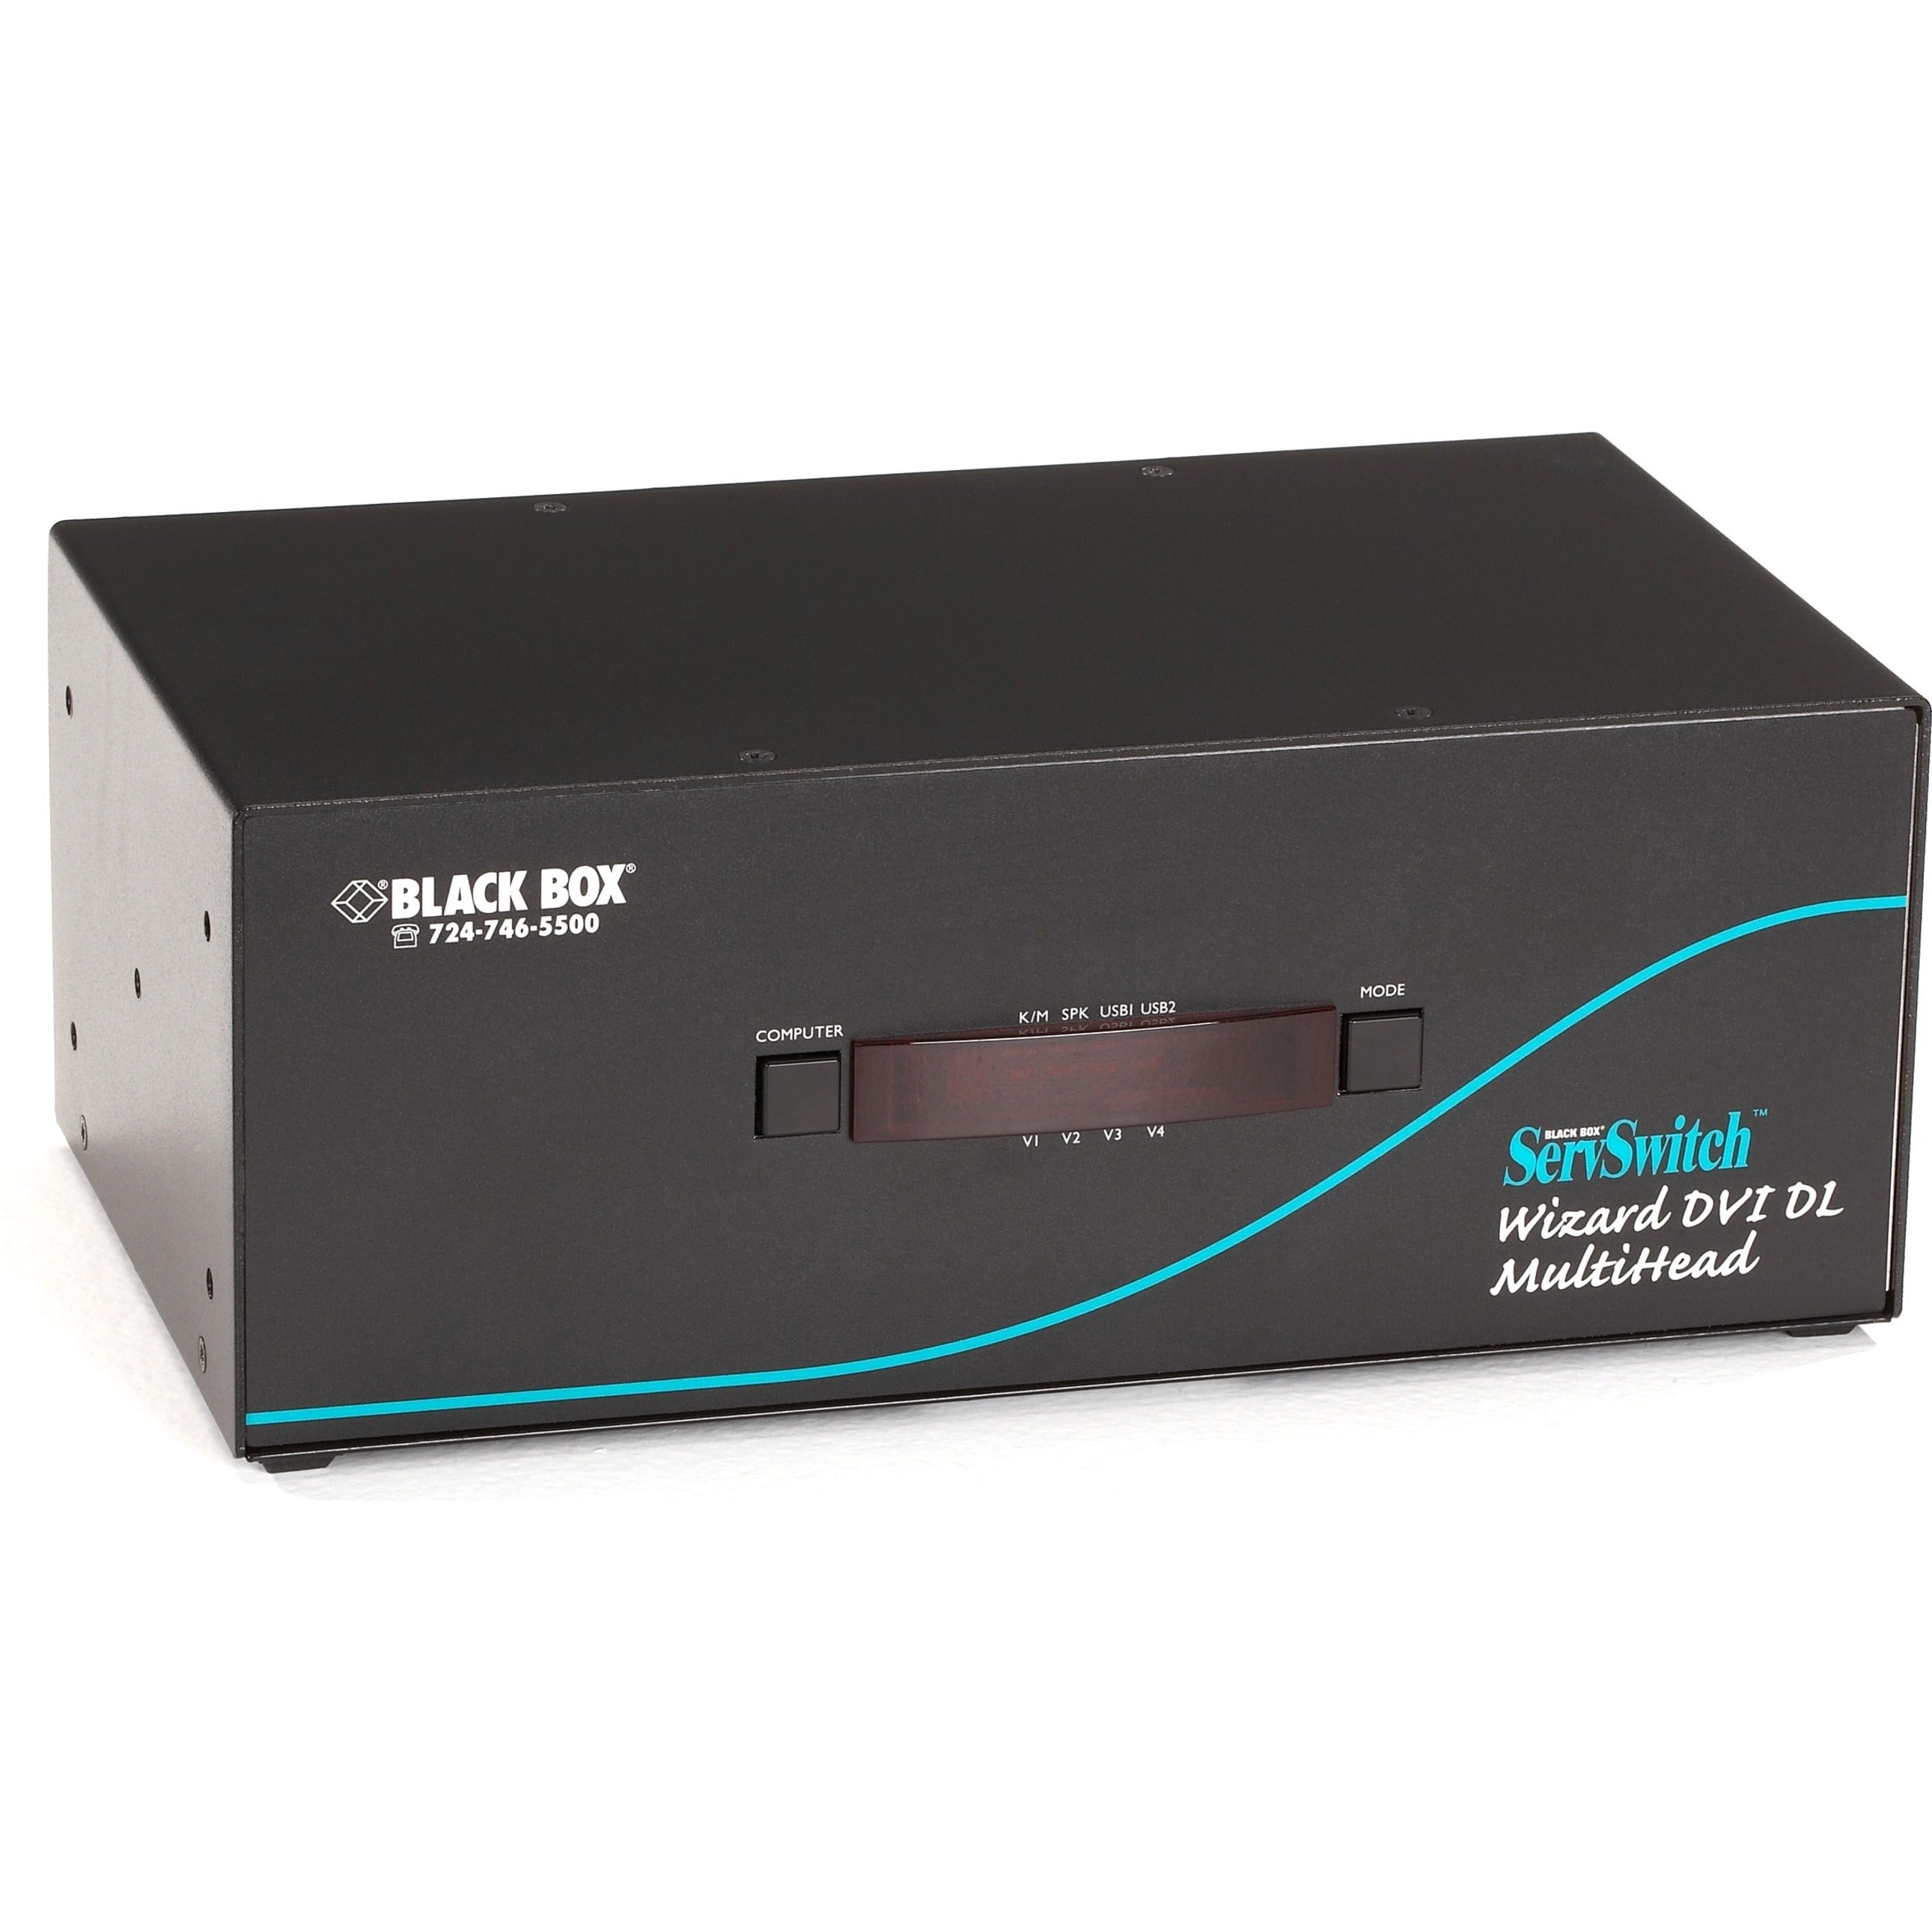 Black Box KV2404A ServSwitch Wizard Dual-Link DVI Quad-Head with USB True Emulation, WQXGA, 2560 x 1600, 2 Year Warranty